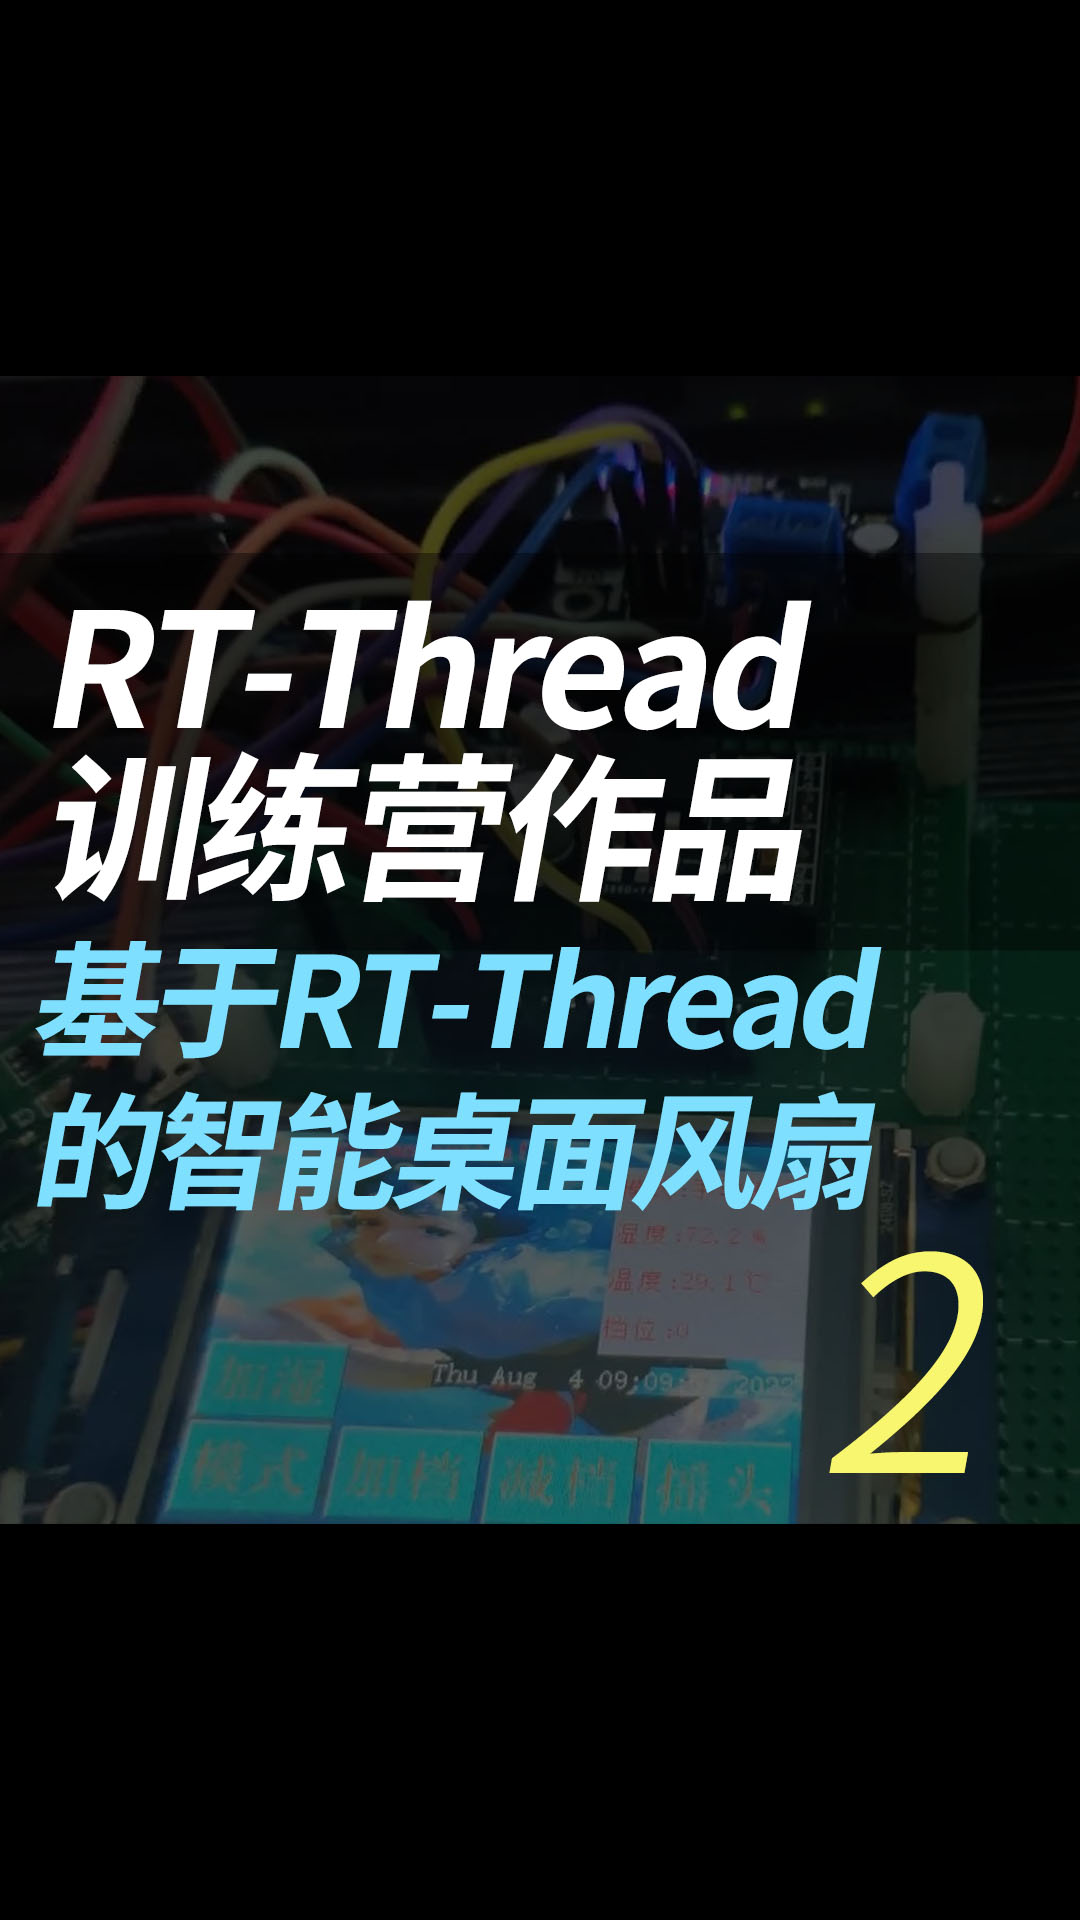 RT-Thread 训练营作品--基于RT-Thread的智能桌面风扇 - 2.实物展示#RT-Thread 